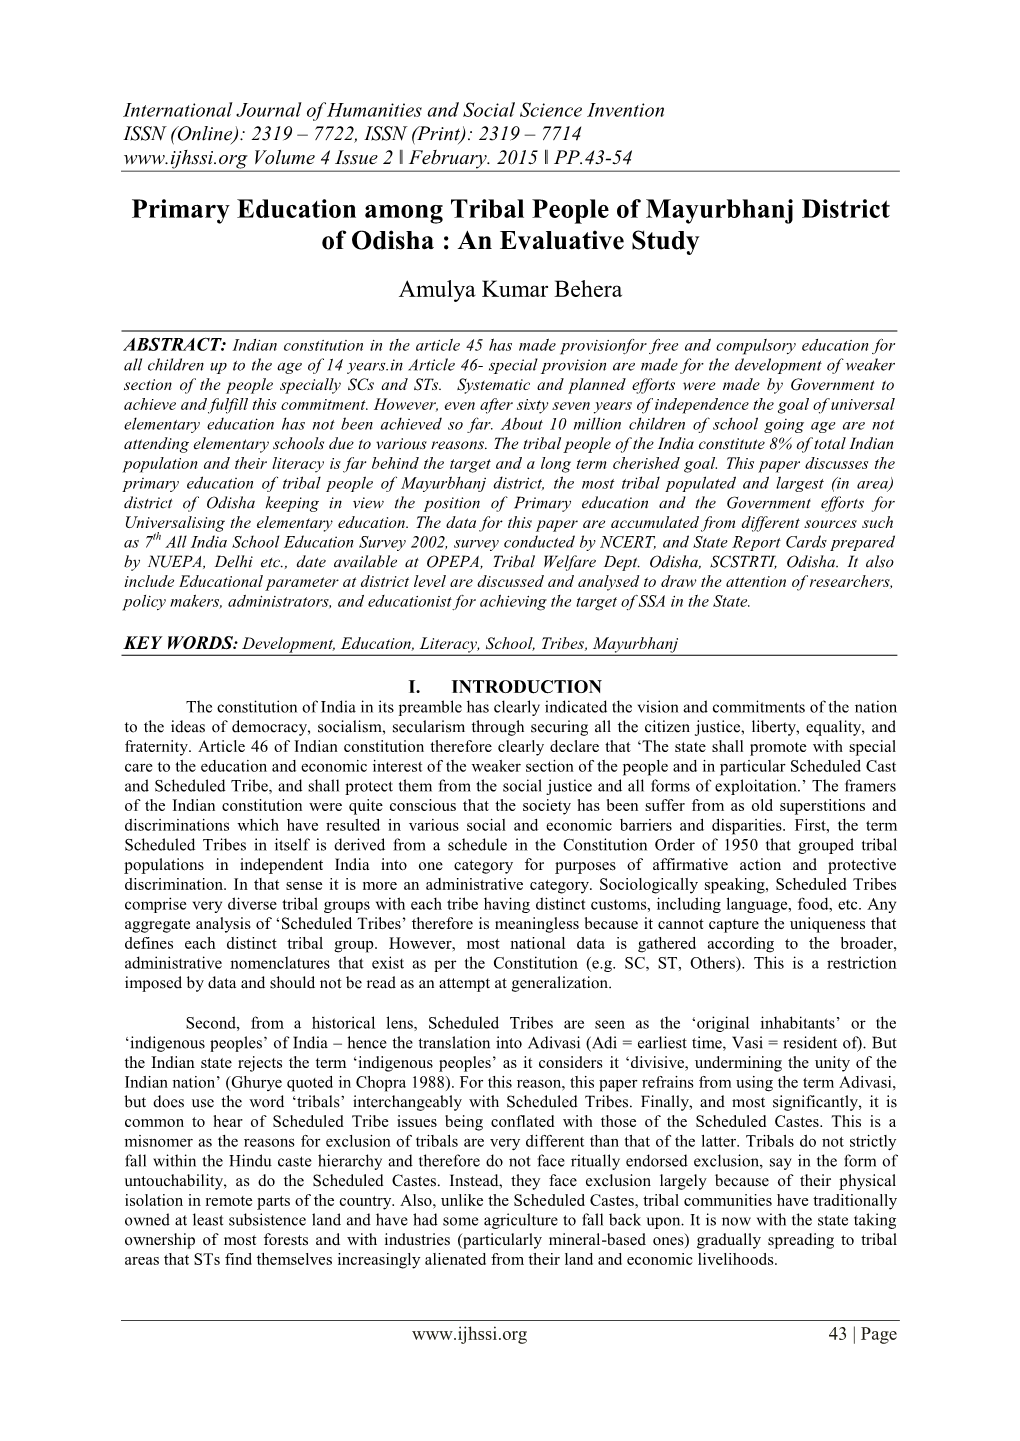 Primary Education Among Tribal People of Mayurbhanj District of Odisha : an Evaluative Study